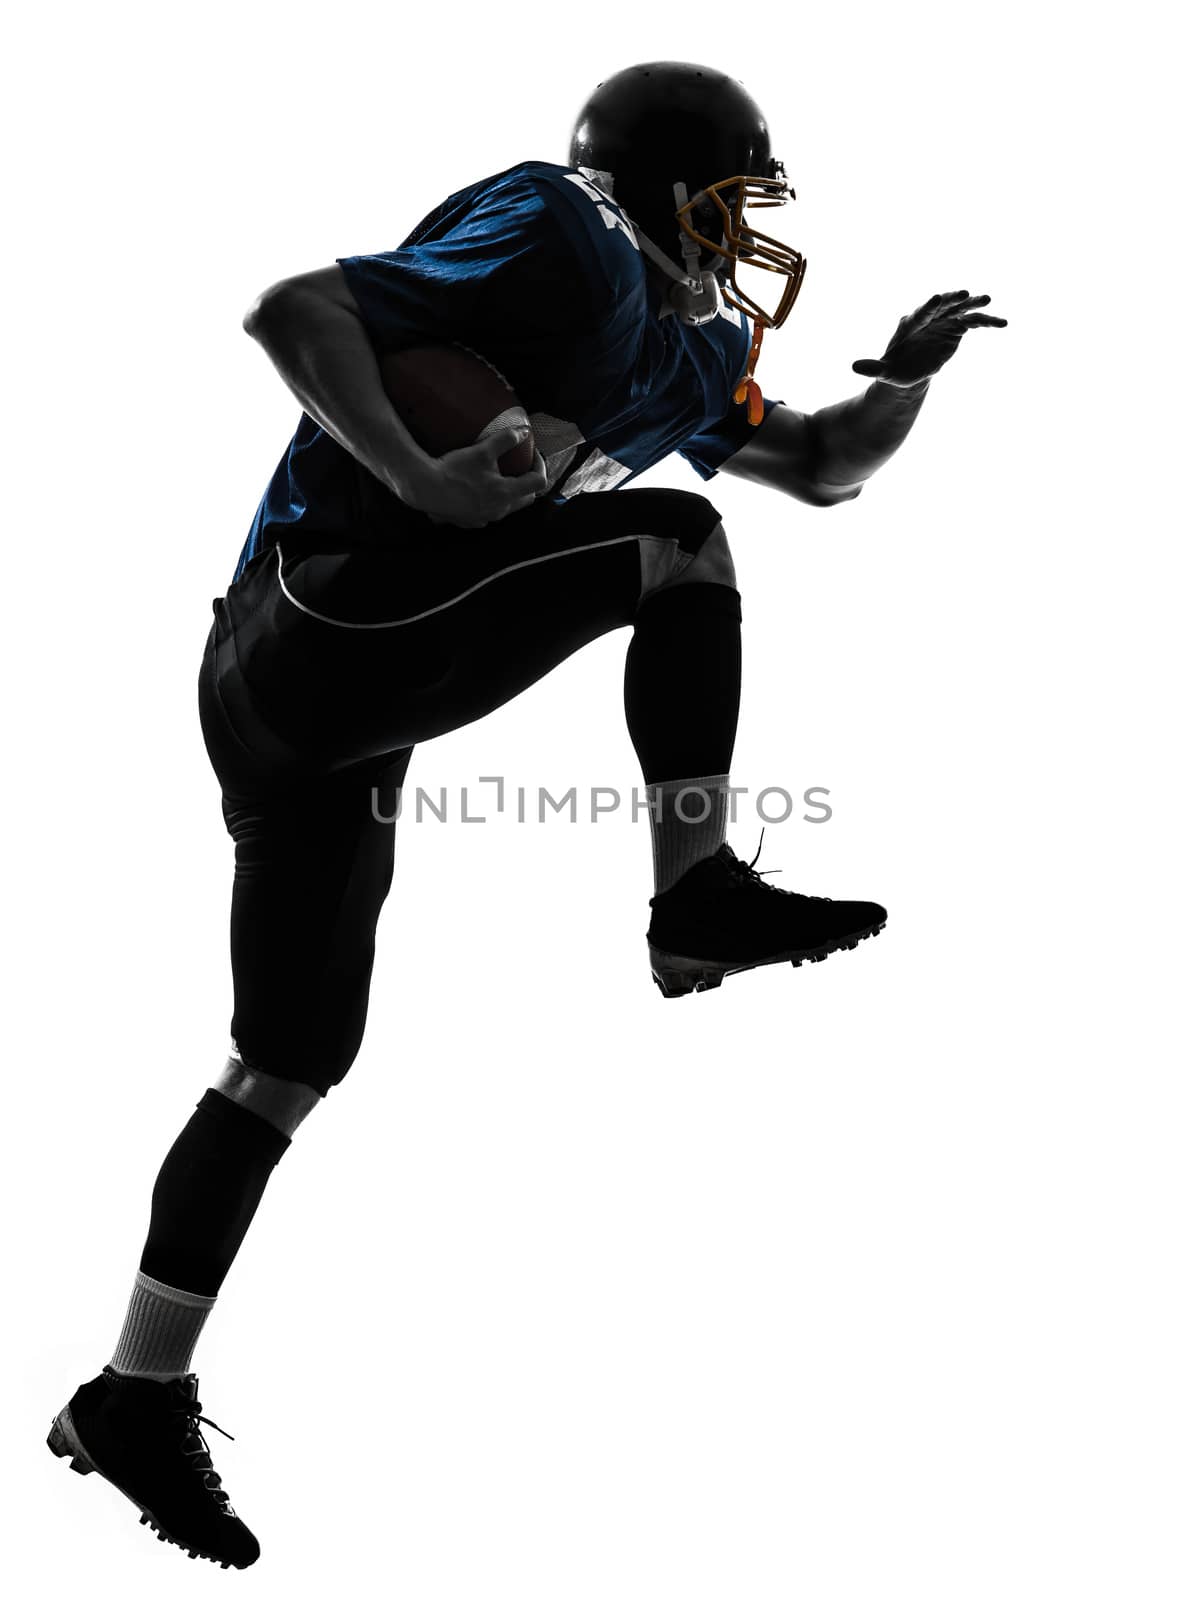 american football player man running  silhouette by PIXSTILL